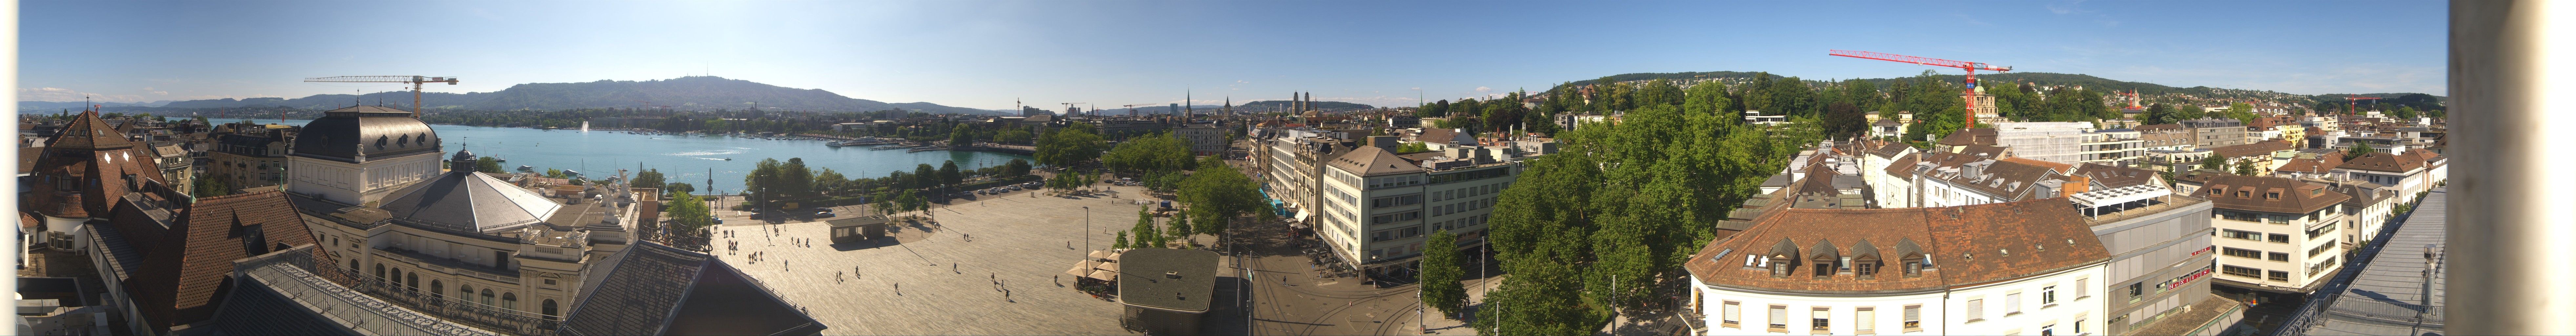 Zürich: Sechseläutenplatz